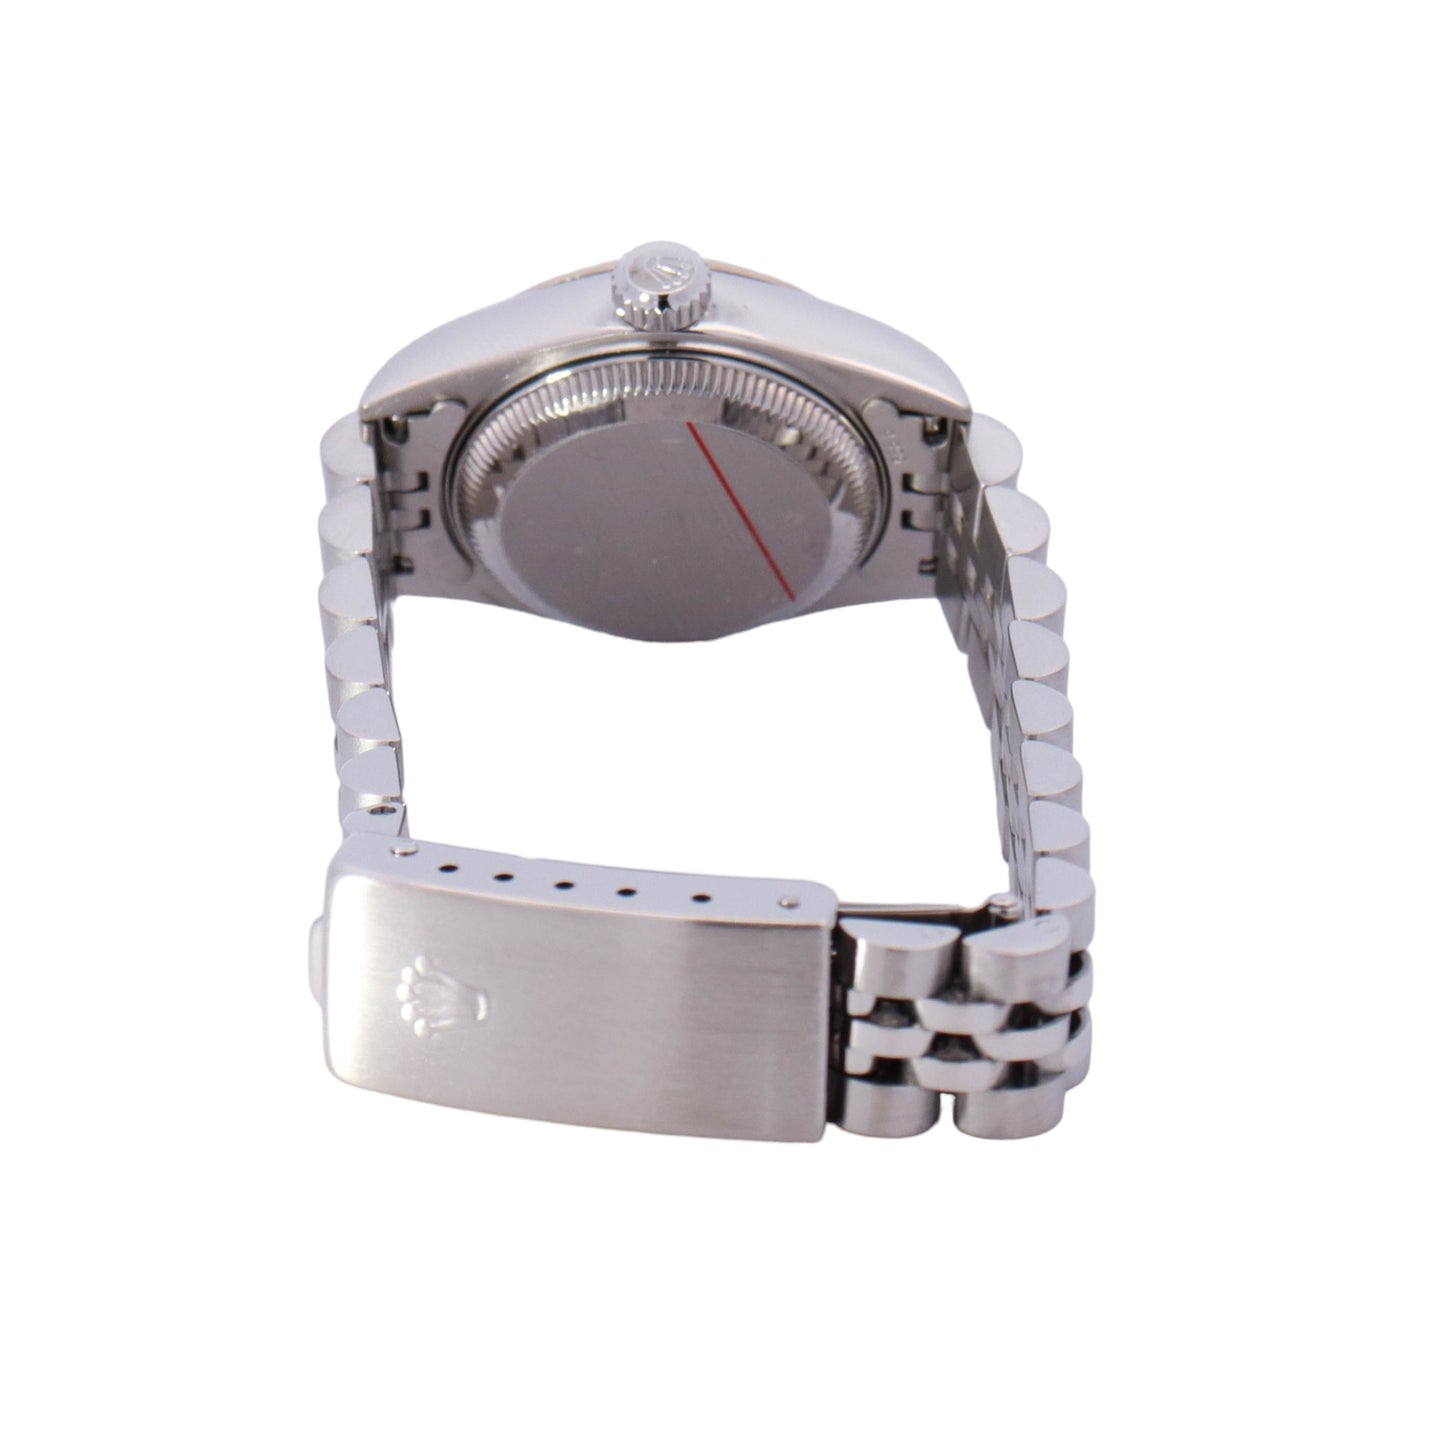 Rolex Datejust Stainless Steel 26mm Black Stick Dial Watch Reference# 179174 - Happy Jewelers Fine Jewelry Lifetime Warranty